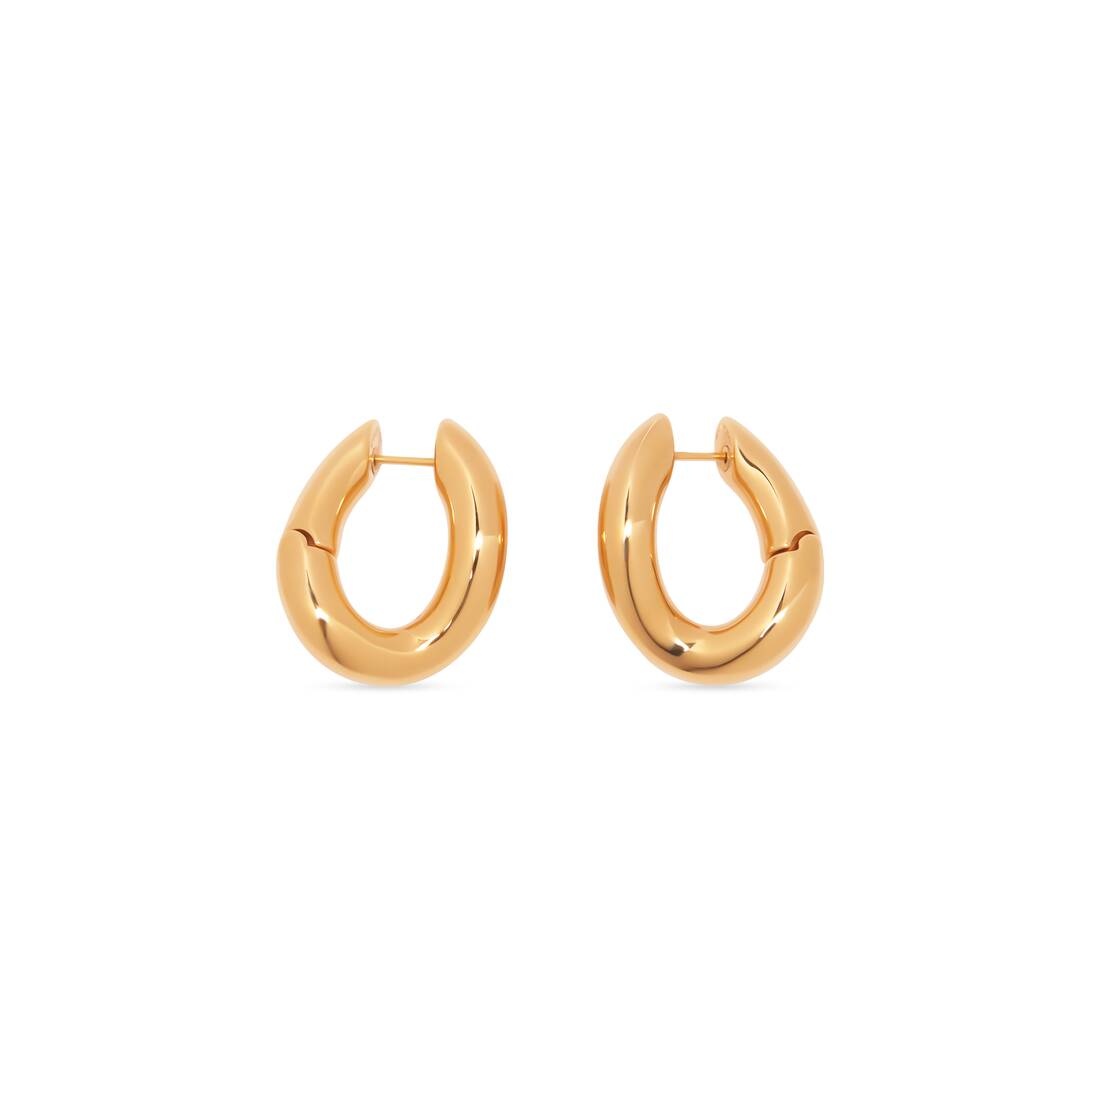 Women's Loop Earrings in Gold - 1